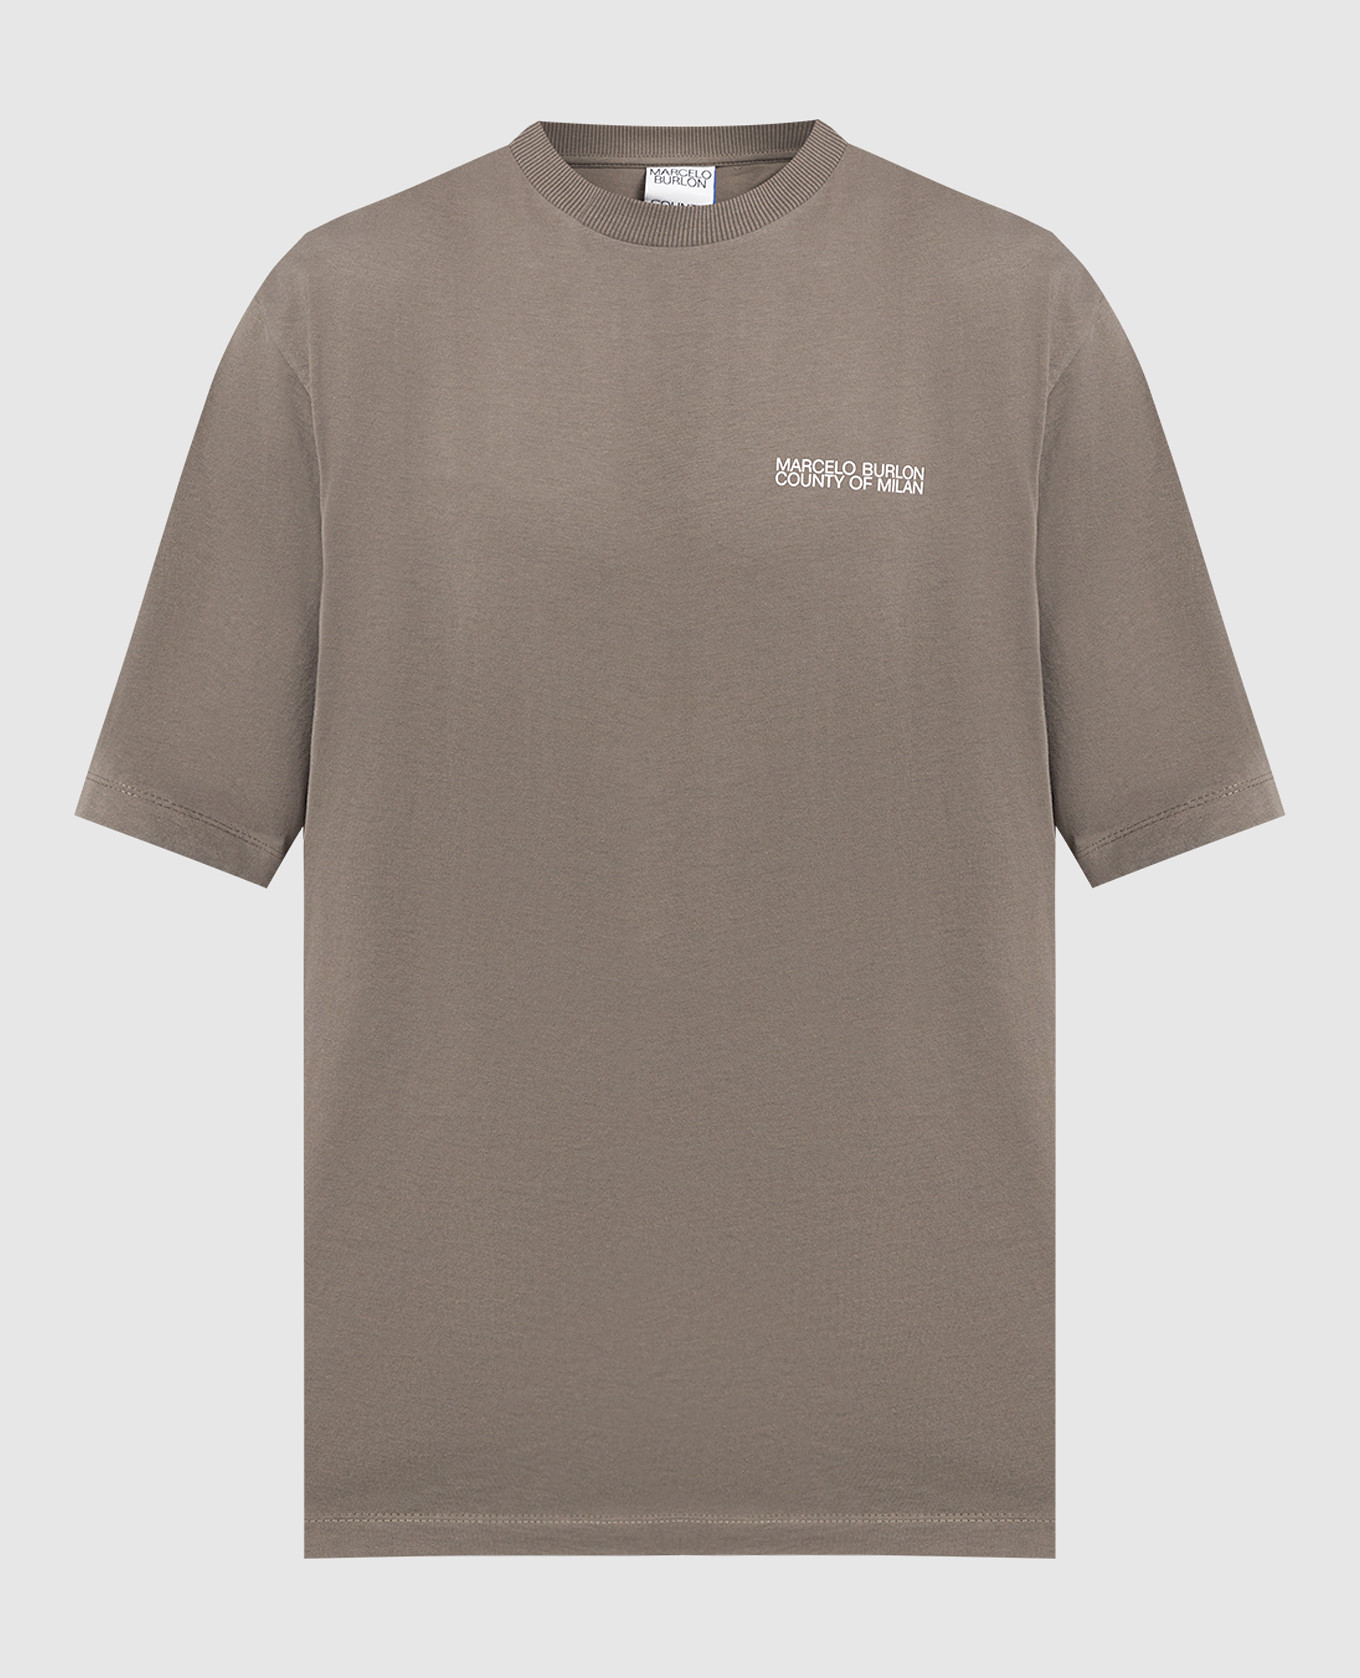 TEMPERA CROSS OVER khaki t-shirt with logo print